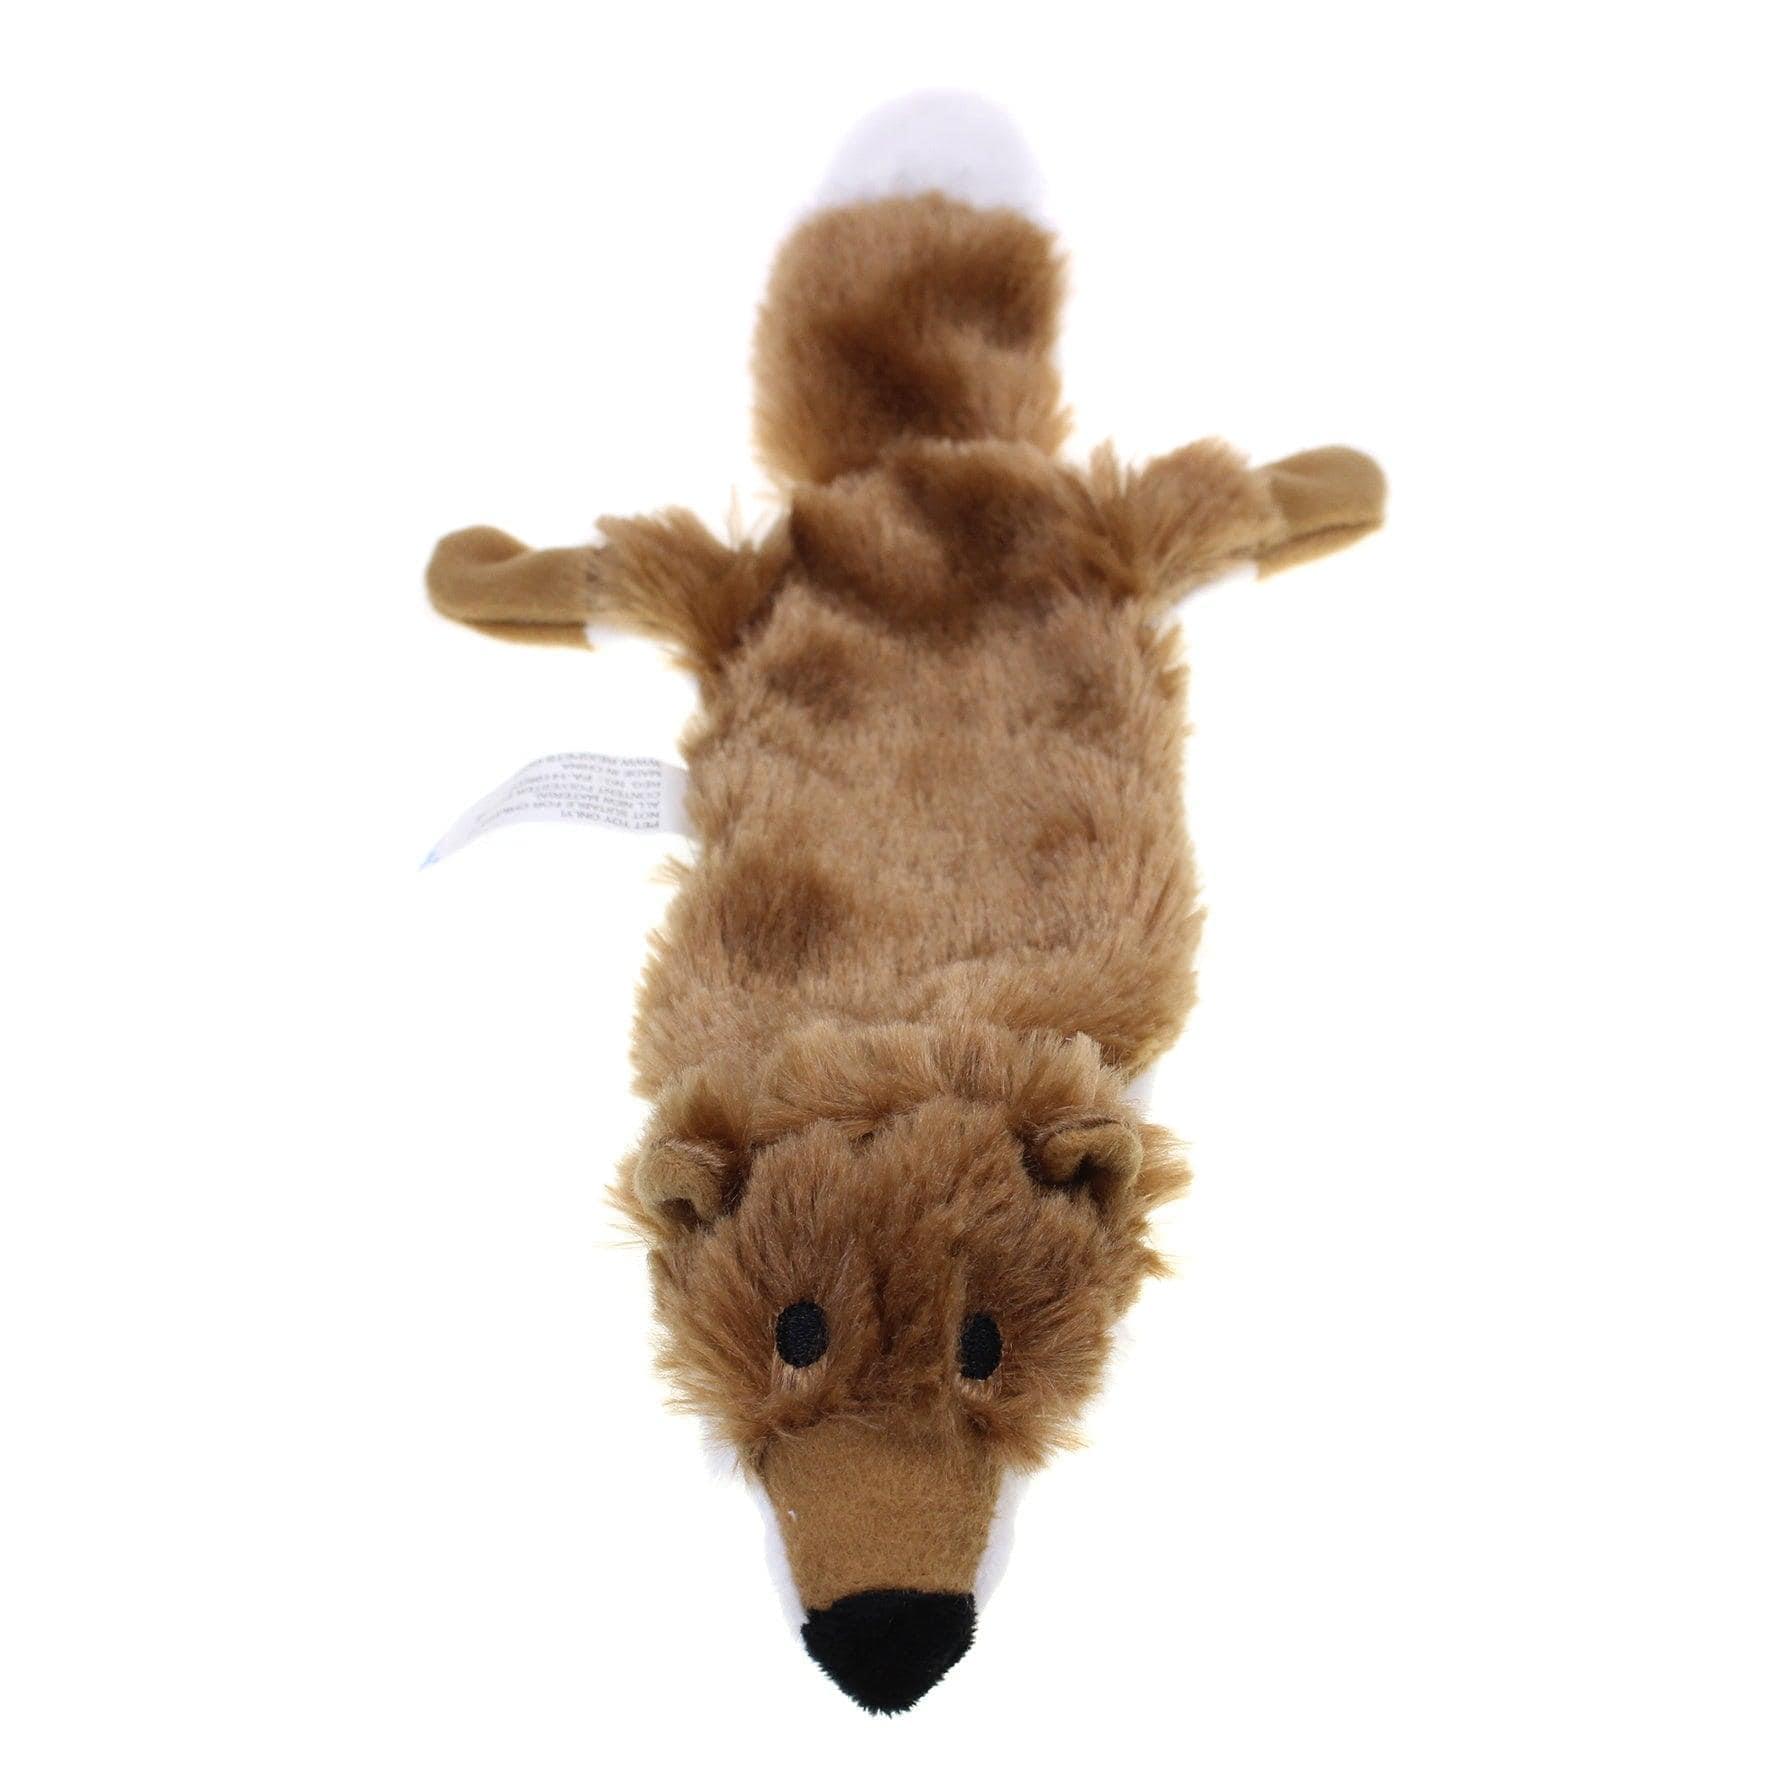 Squeaky Plush Dog Toy Speedy Fox